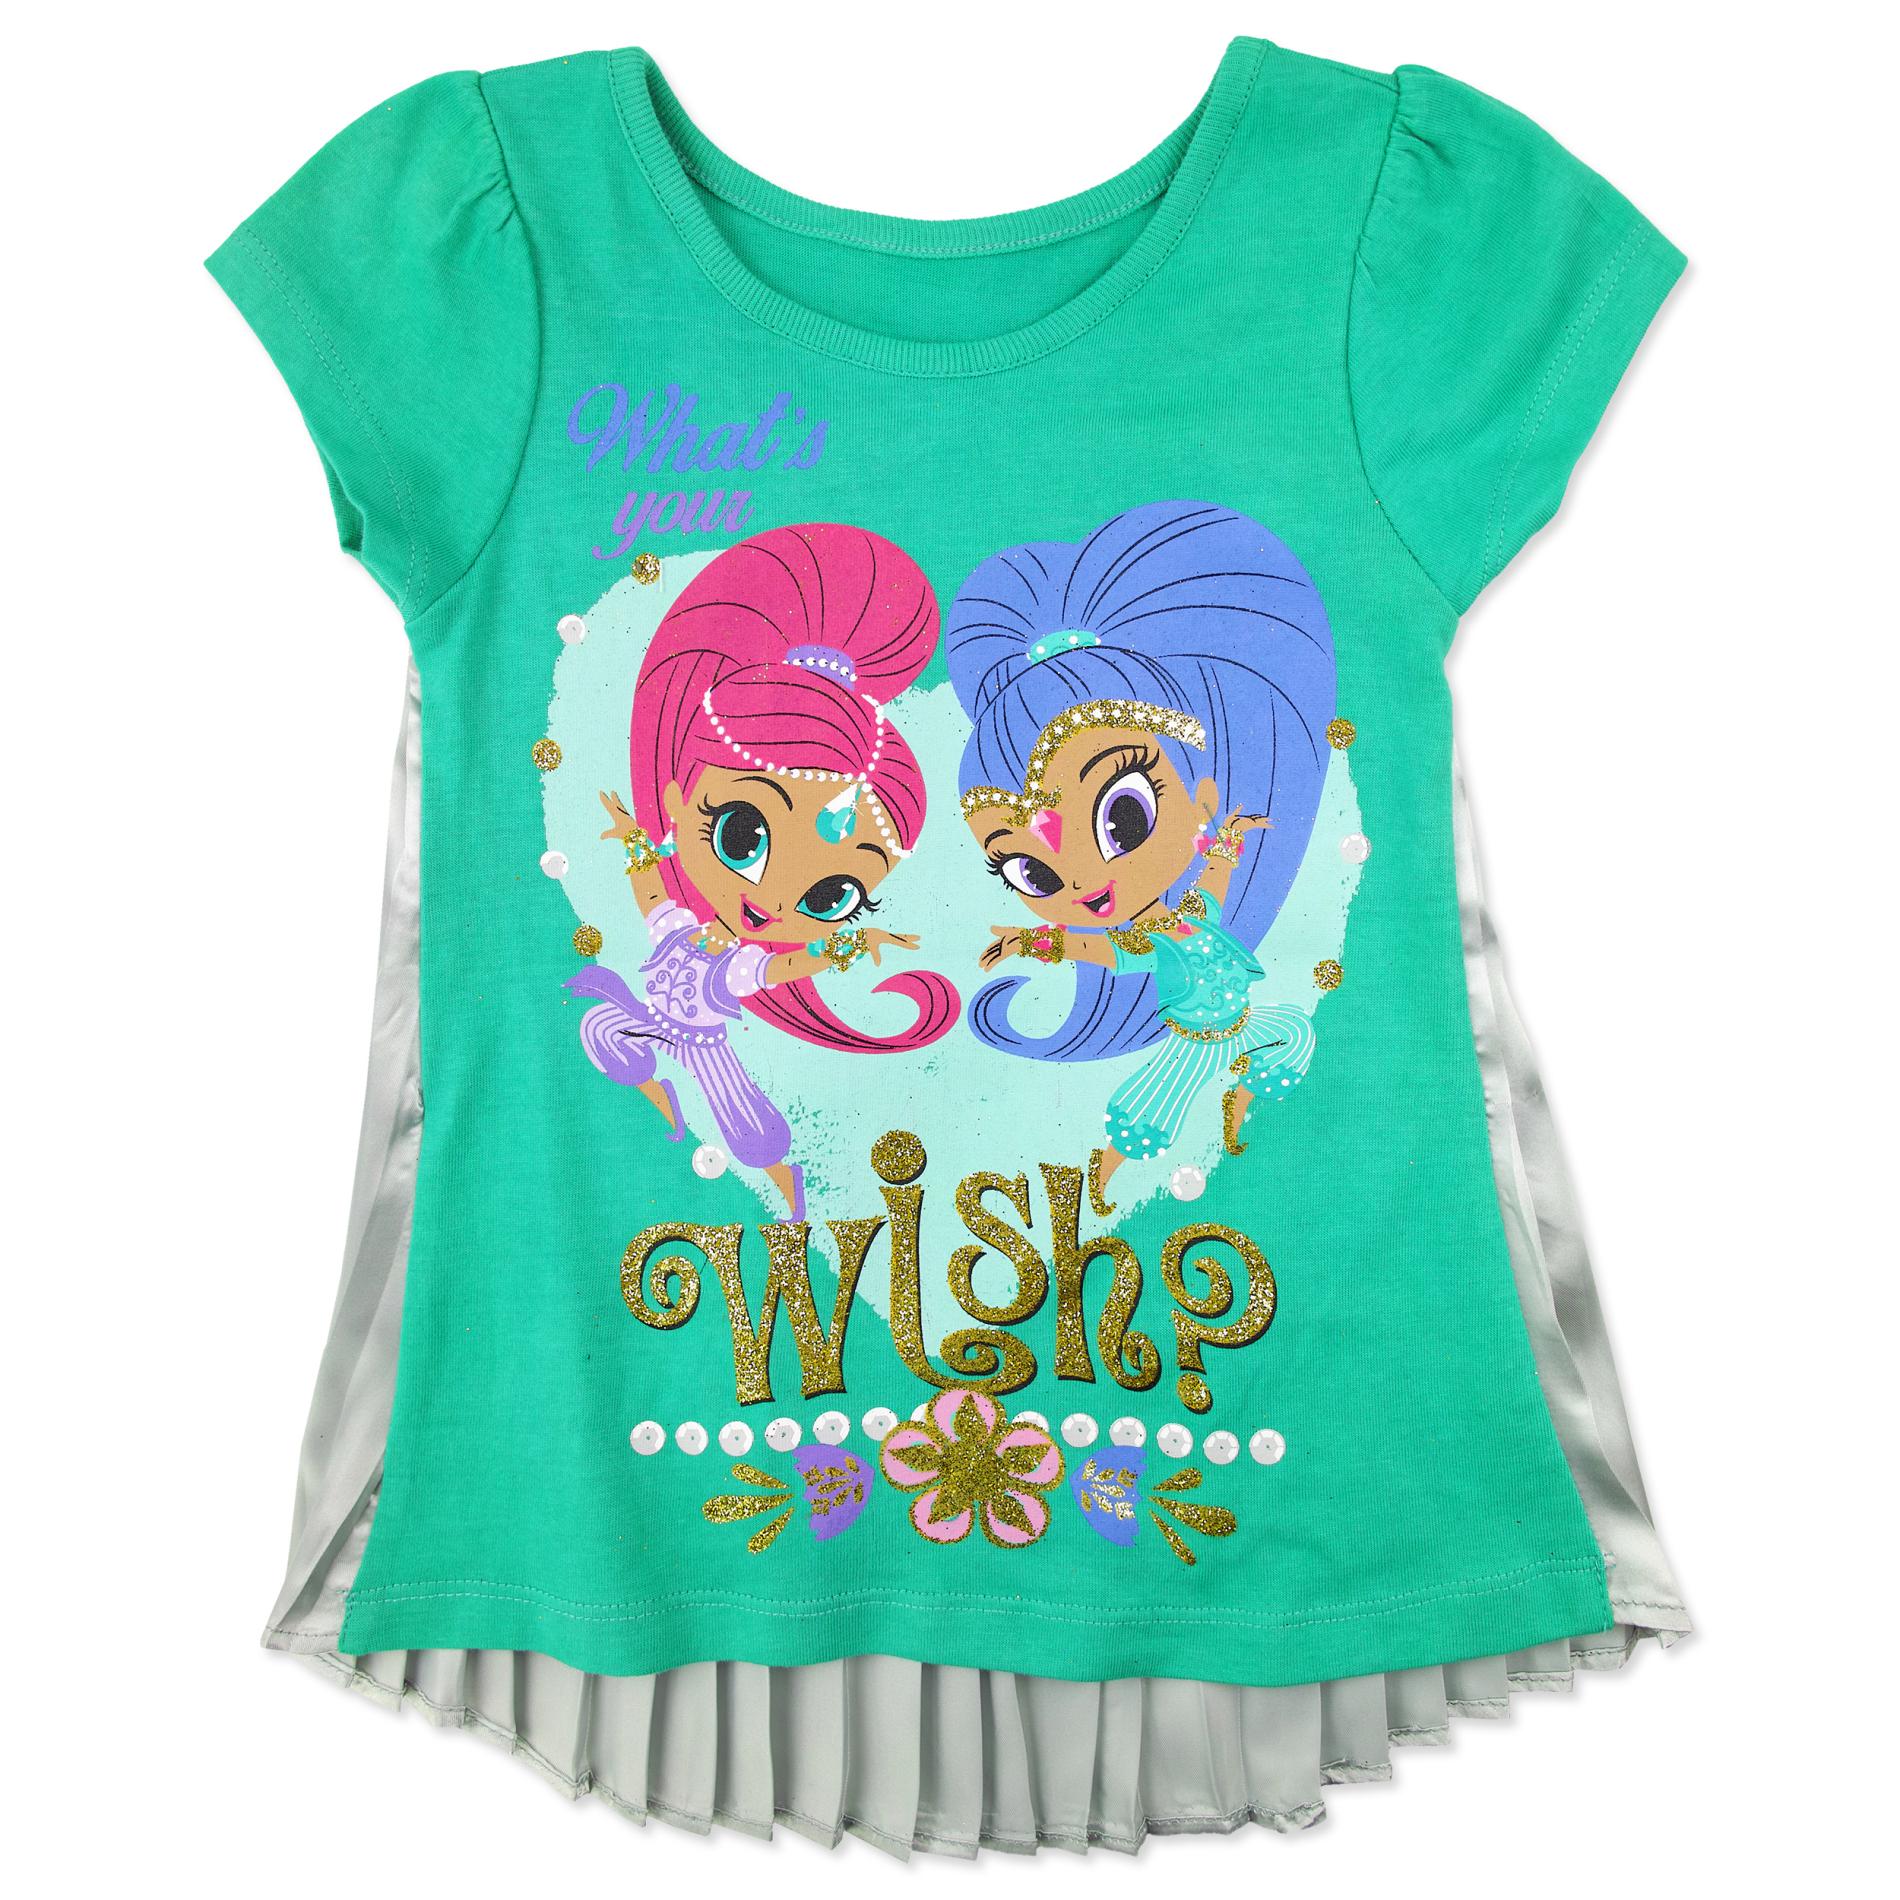 Nickelodeon Shimmer & Shine Toddler Girls' Graphic T-Shirt